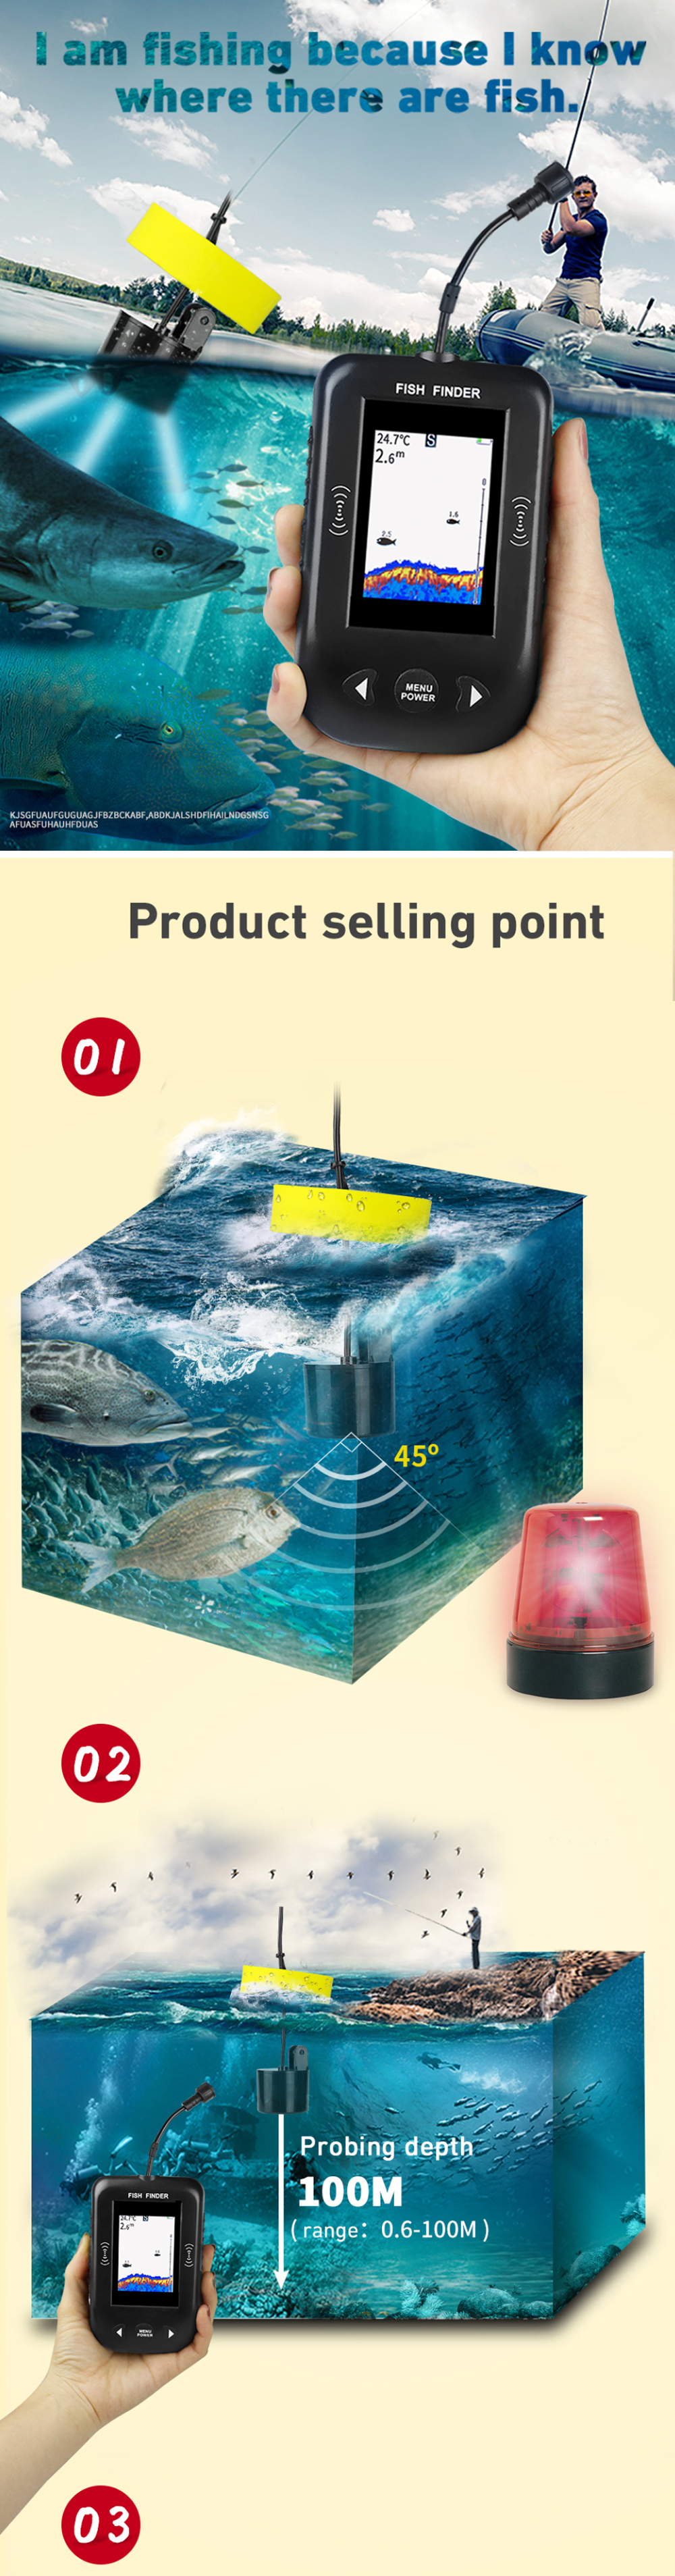 ERCHANG-XF02-C-28-inch-LCD-Fish-Finder-Sonar-100M-Depth-Distance-Lake-Fish-Detect-Professional-Sonar-1773226-1